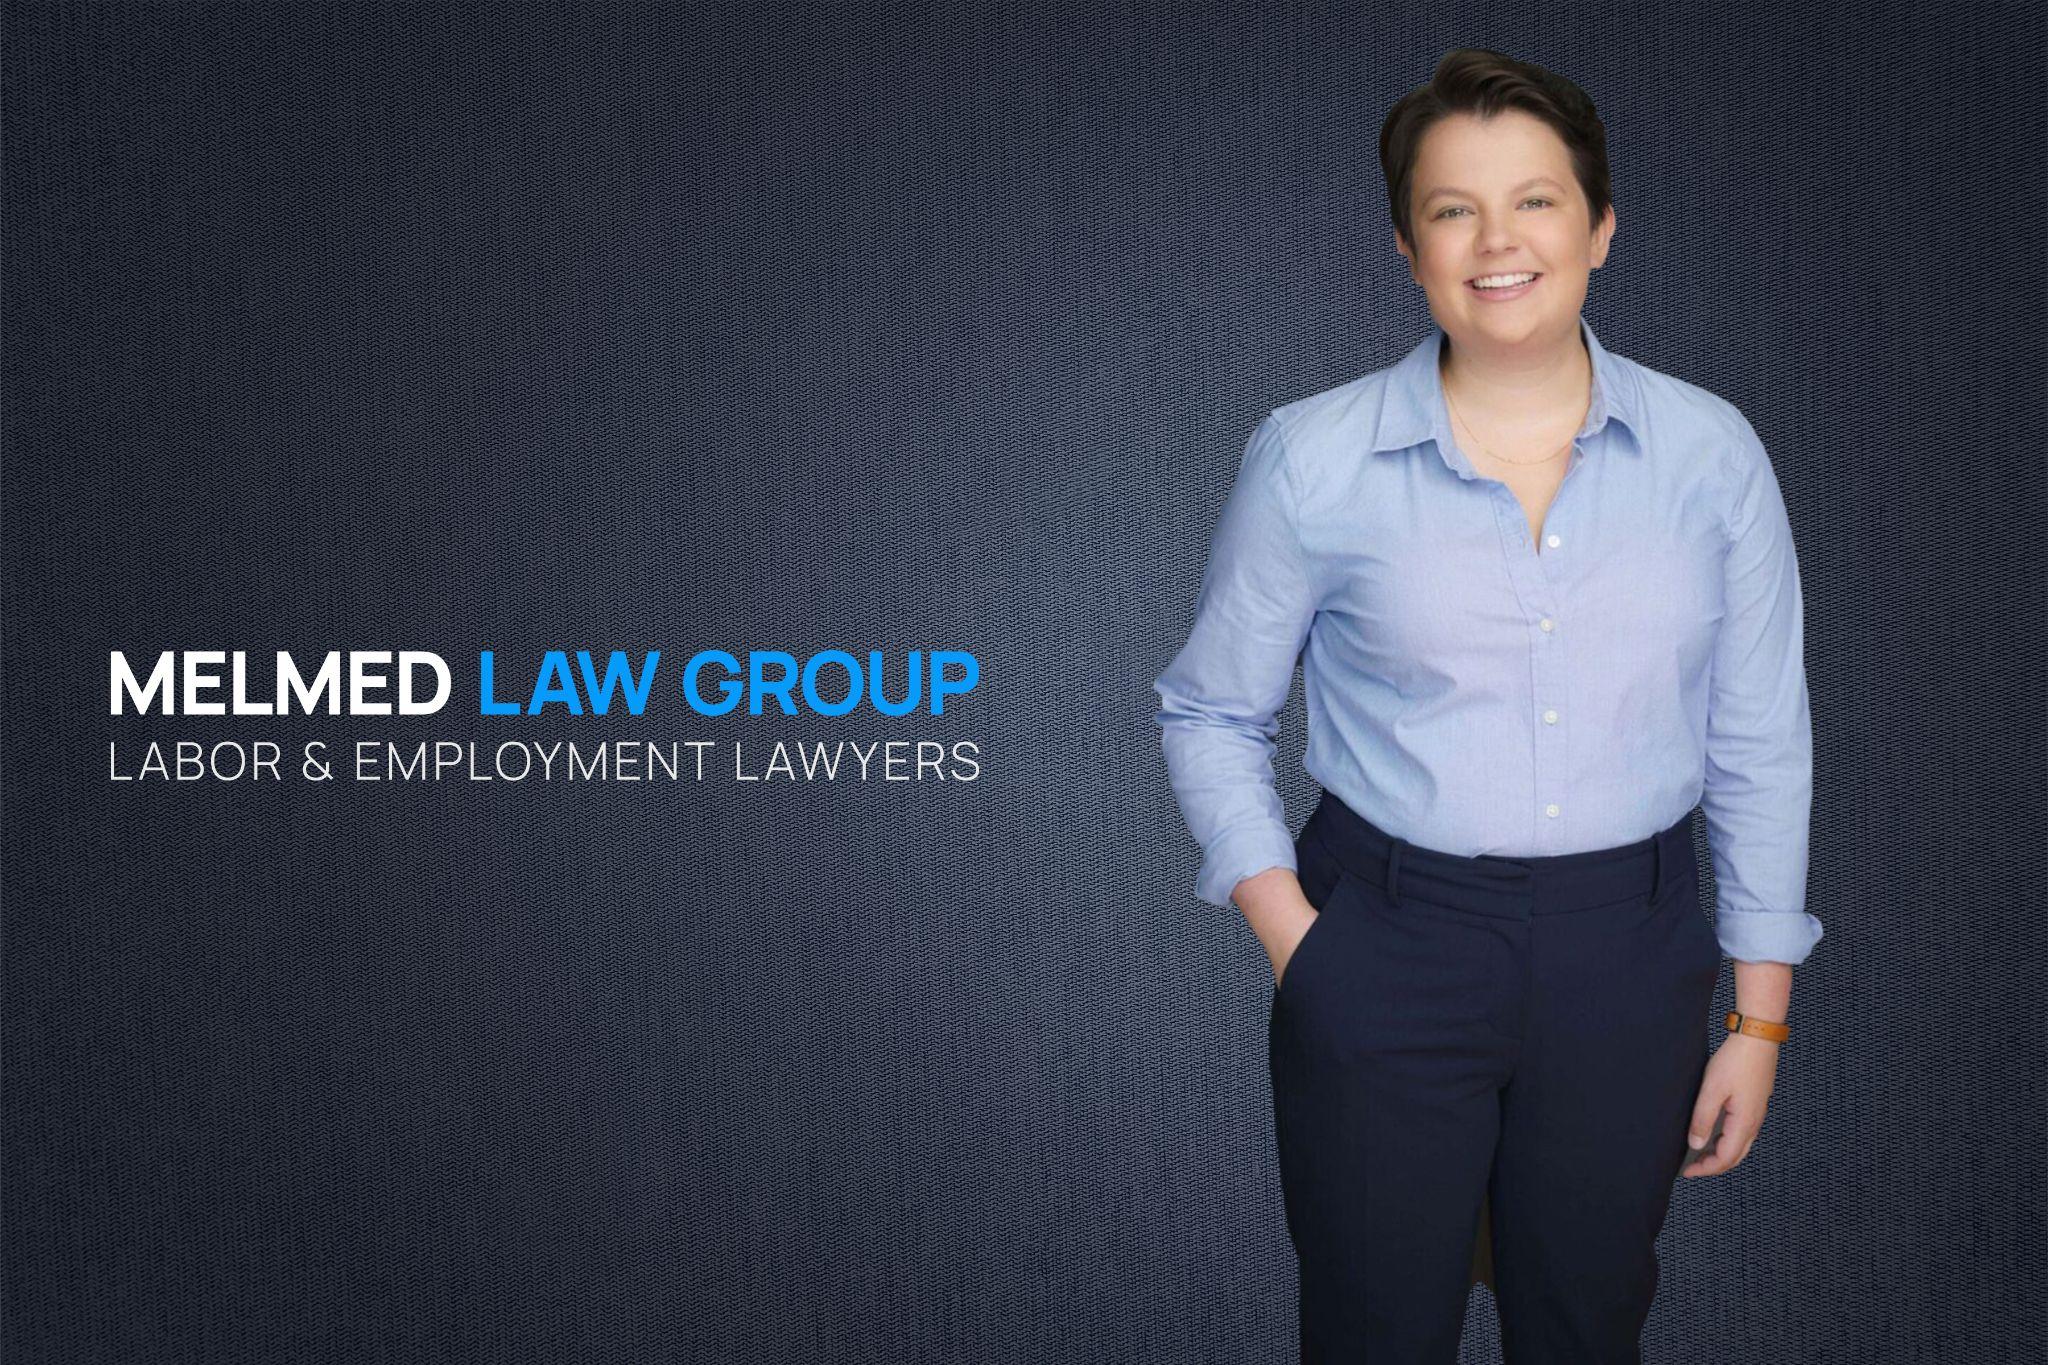 Meet Hannah Becker, Attorney at Melmed Law Group